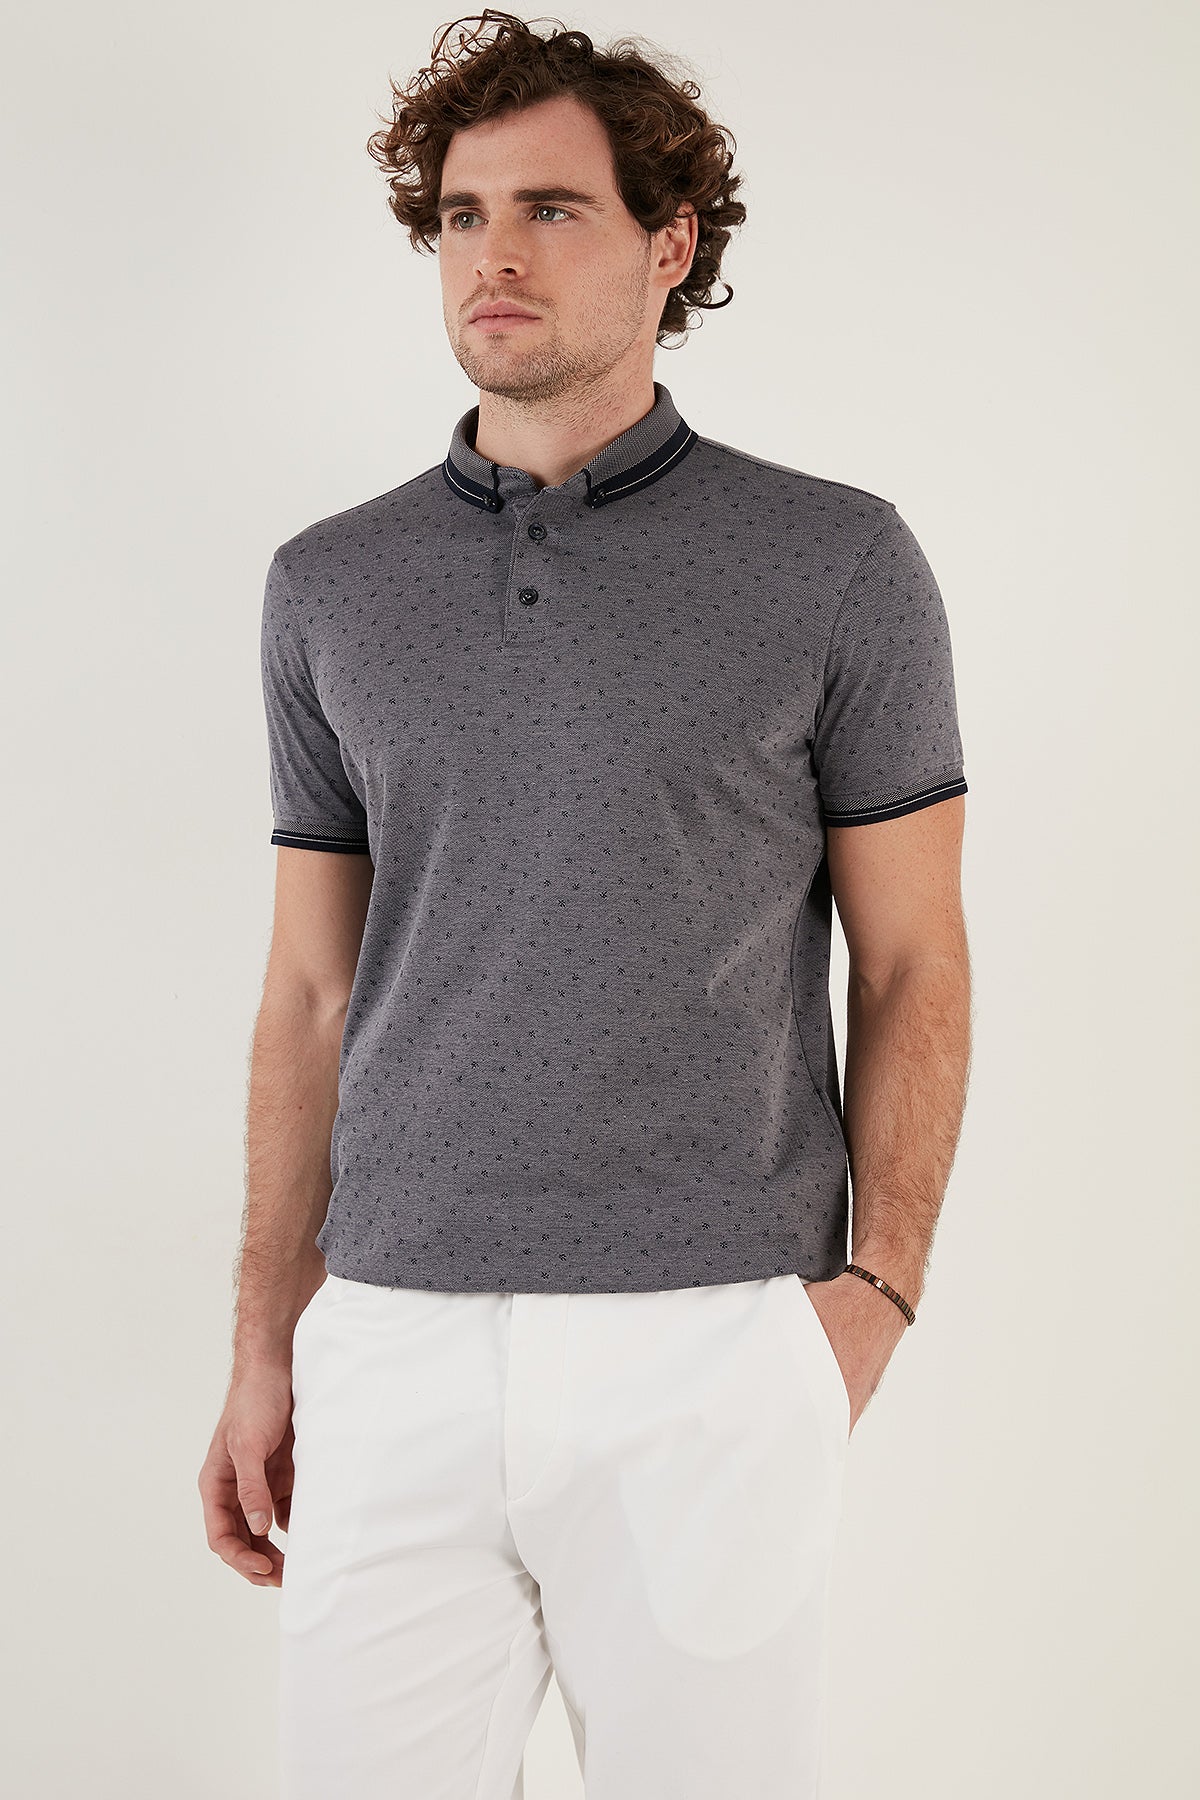 Buratti Pamuk Karışımlı Desenli Slim Fit Erkek Polo T Shirt 646B3250 LACİVERT